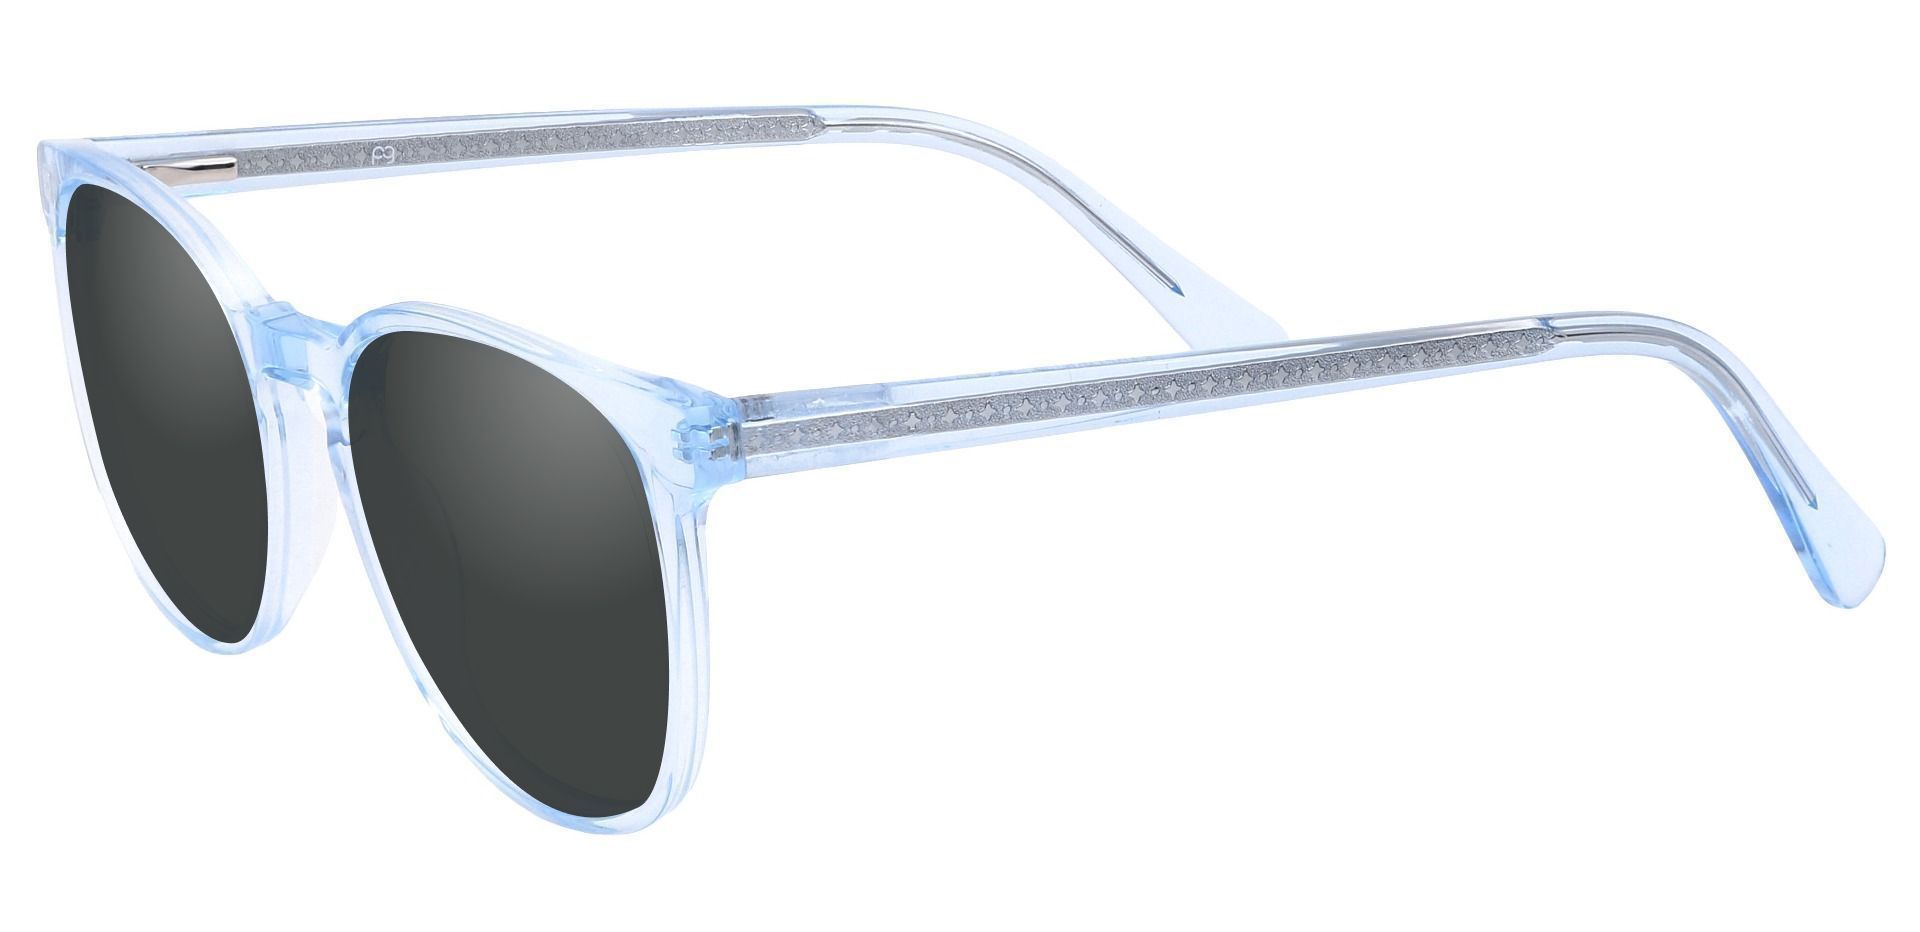 Nebula Round Non-Rx Sunglasses - Blue Frame With Gray Lenses